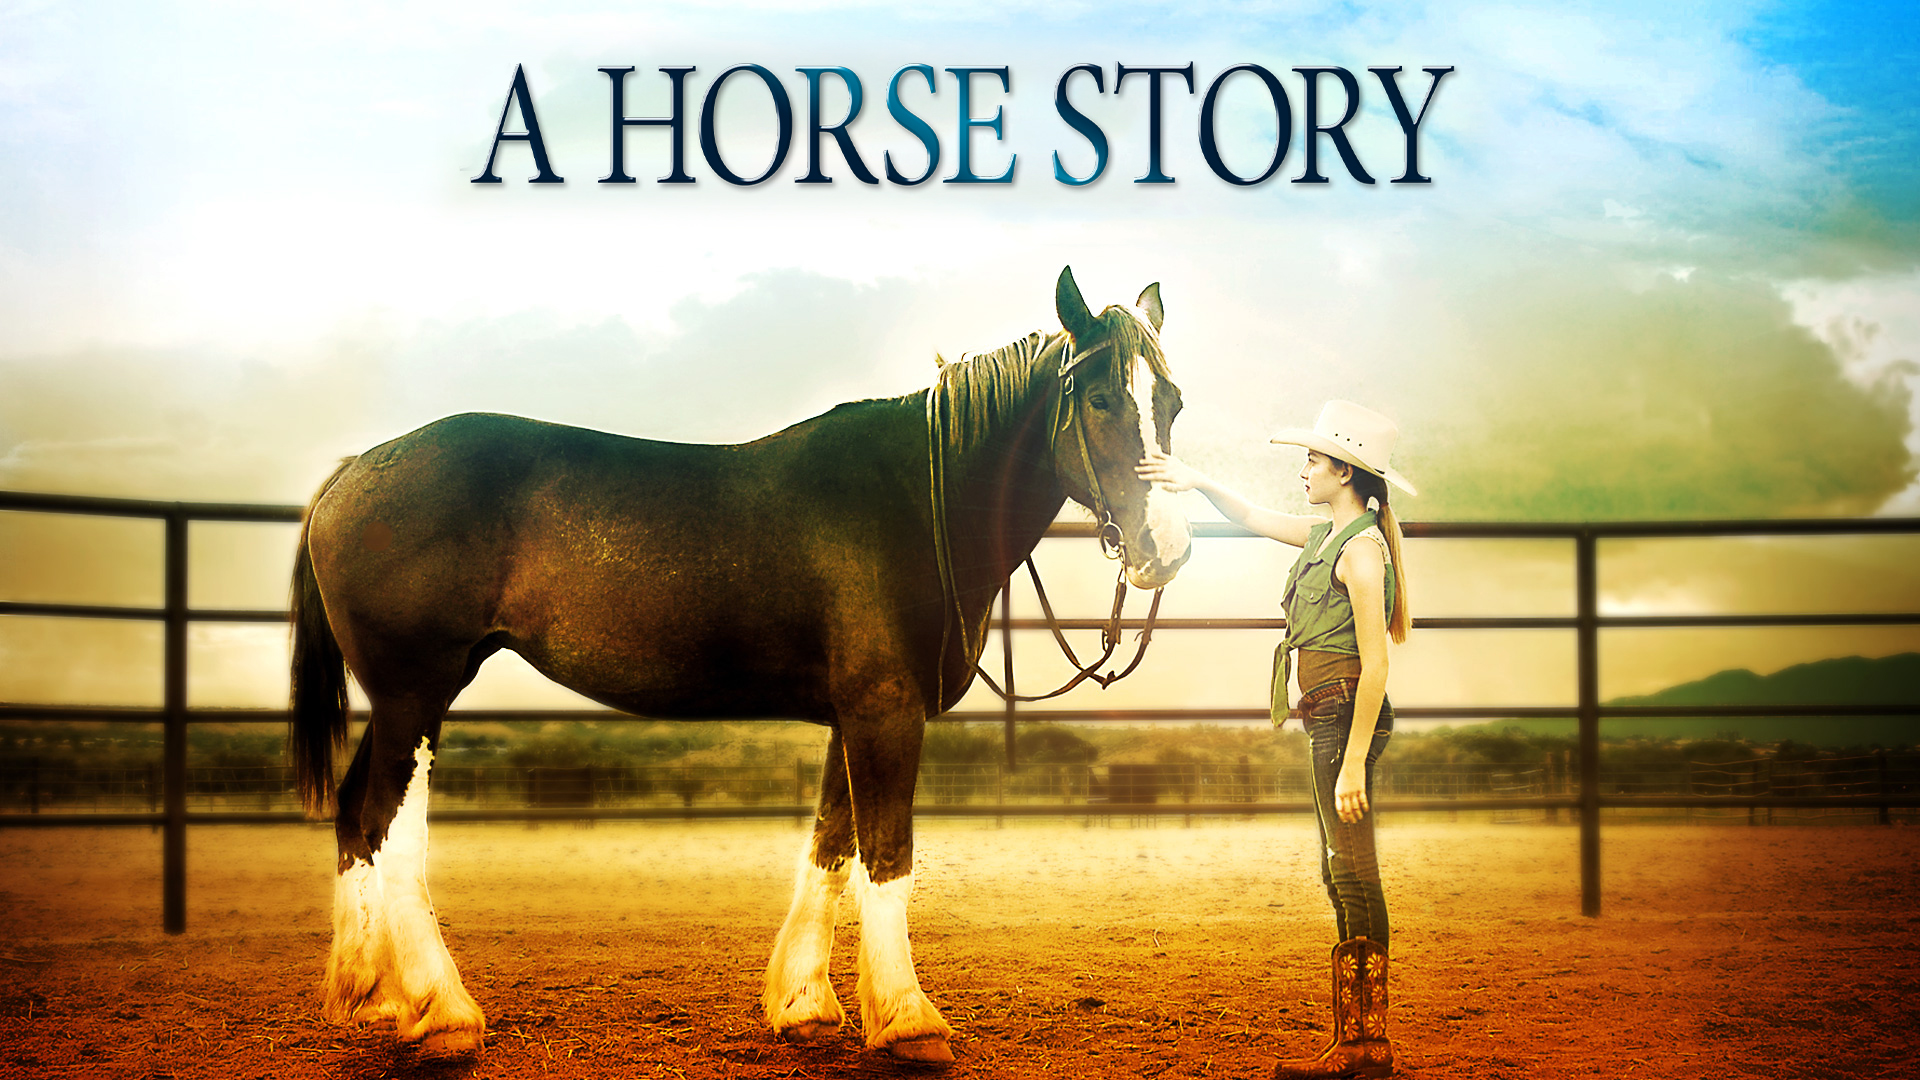 Horse story